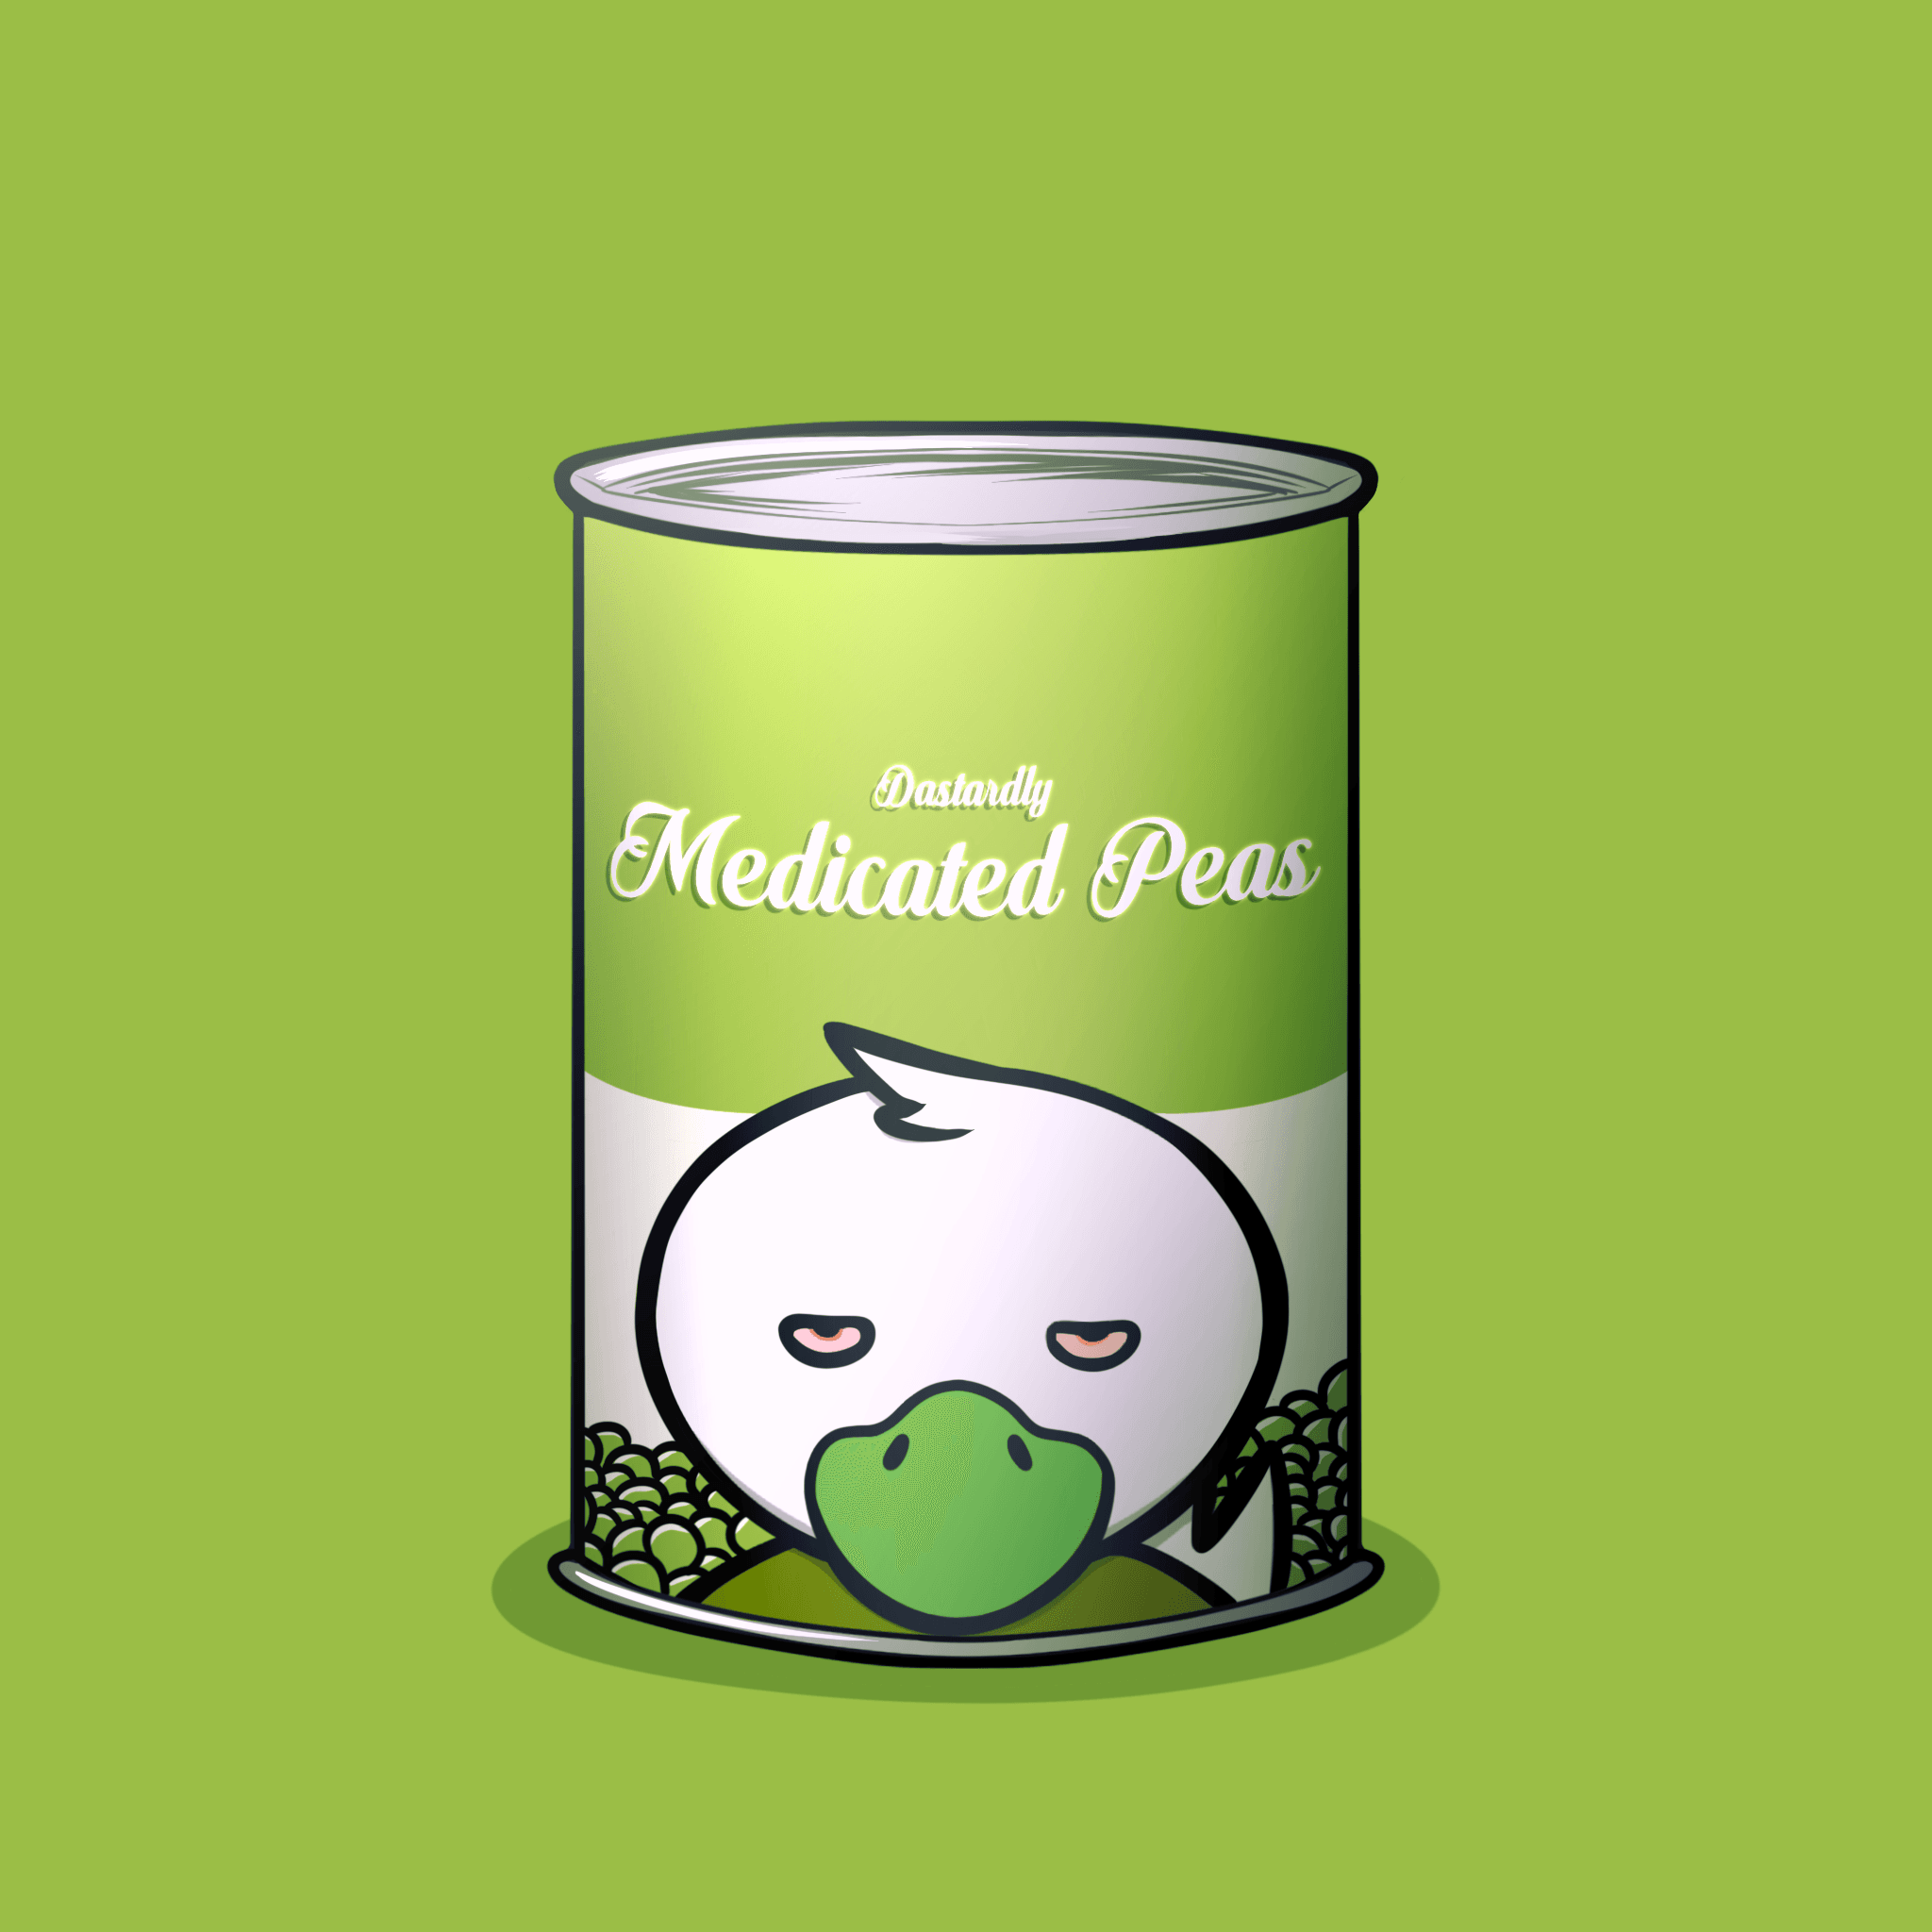 Dastardly Medicated Peas